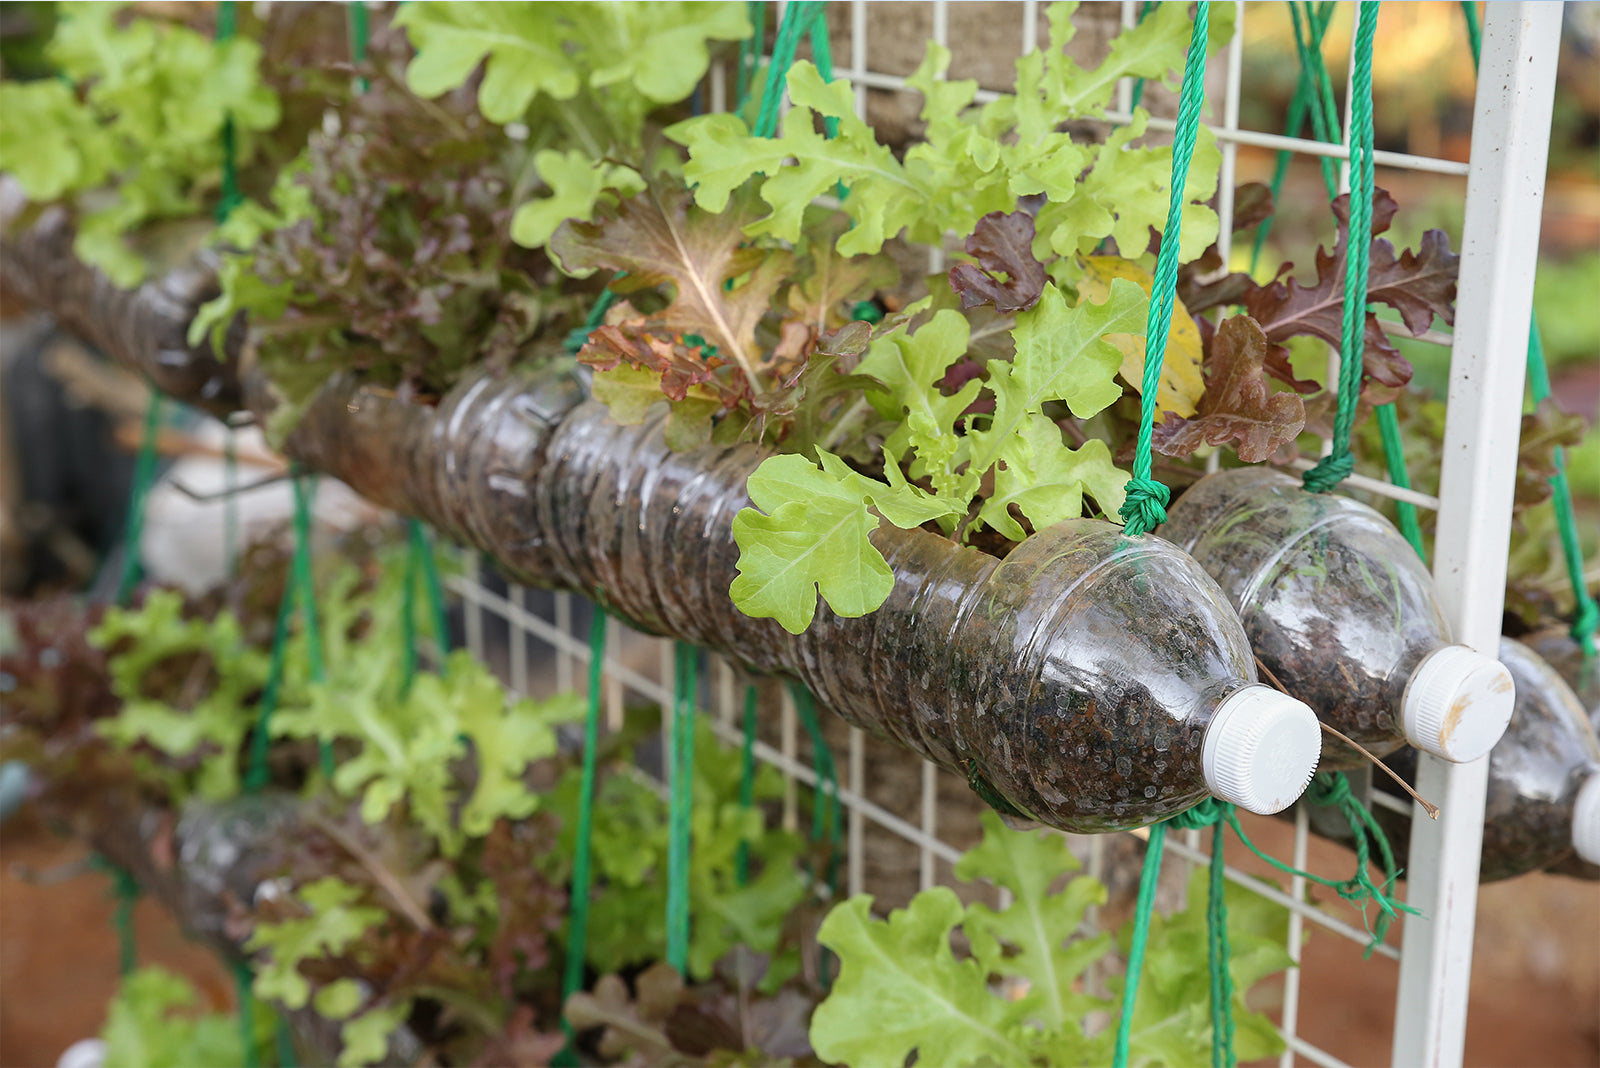 Repurposing Plastic Water Bottles for Gardening Planters